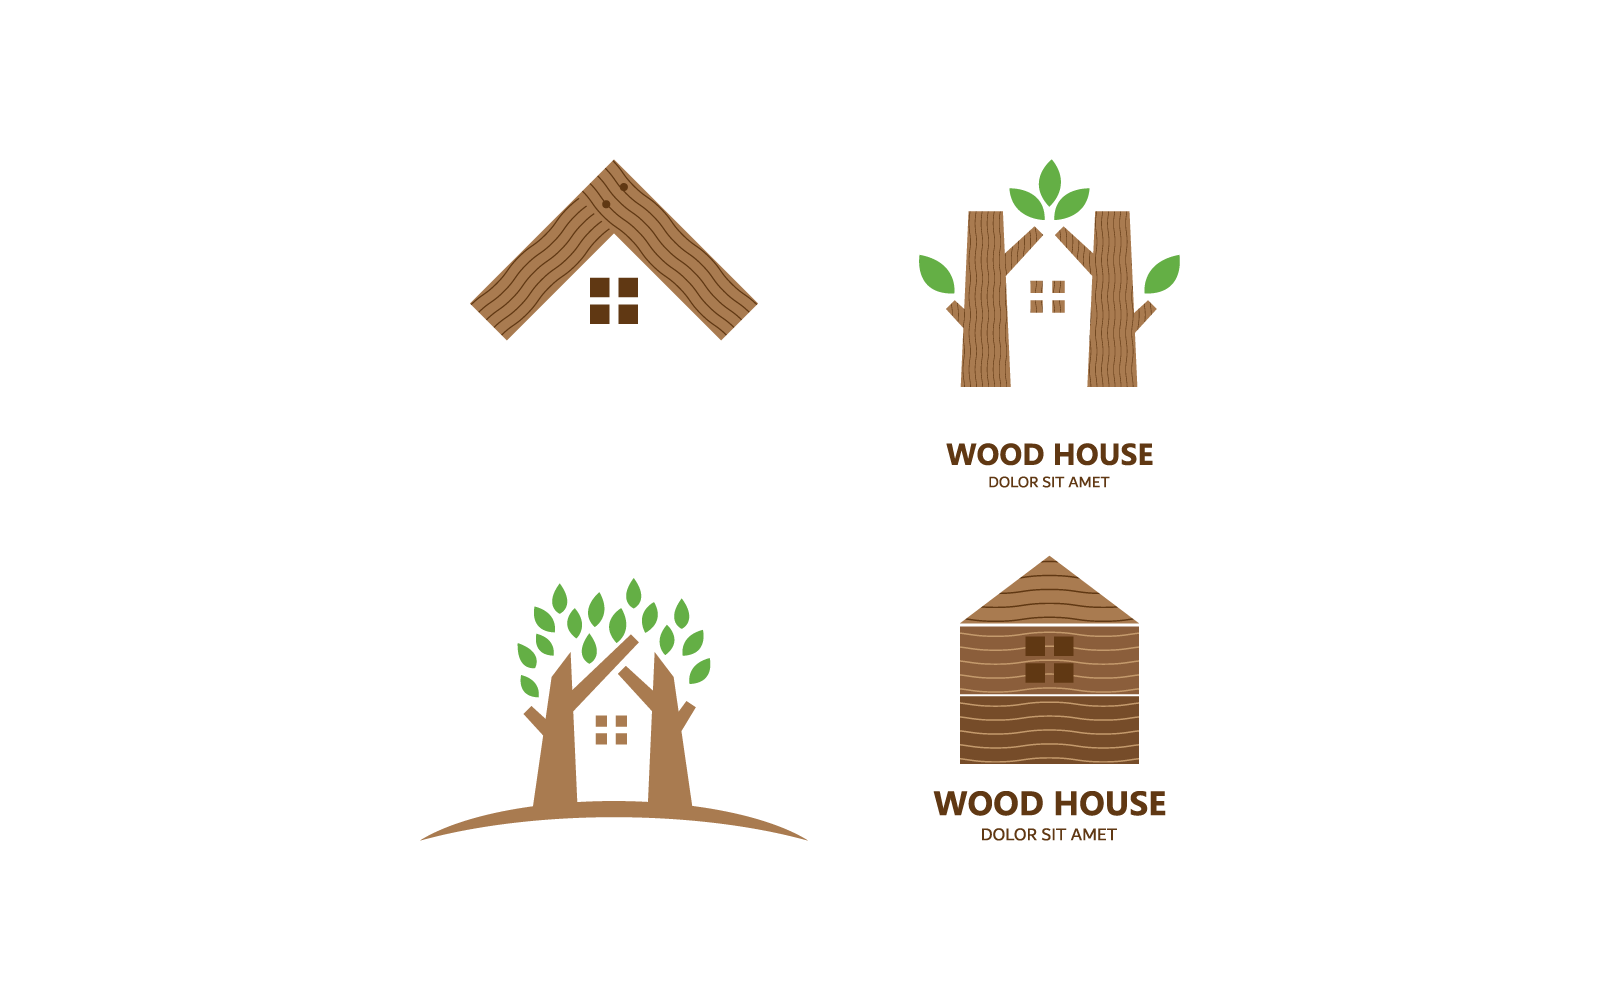 Wood house design vector logo template